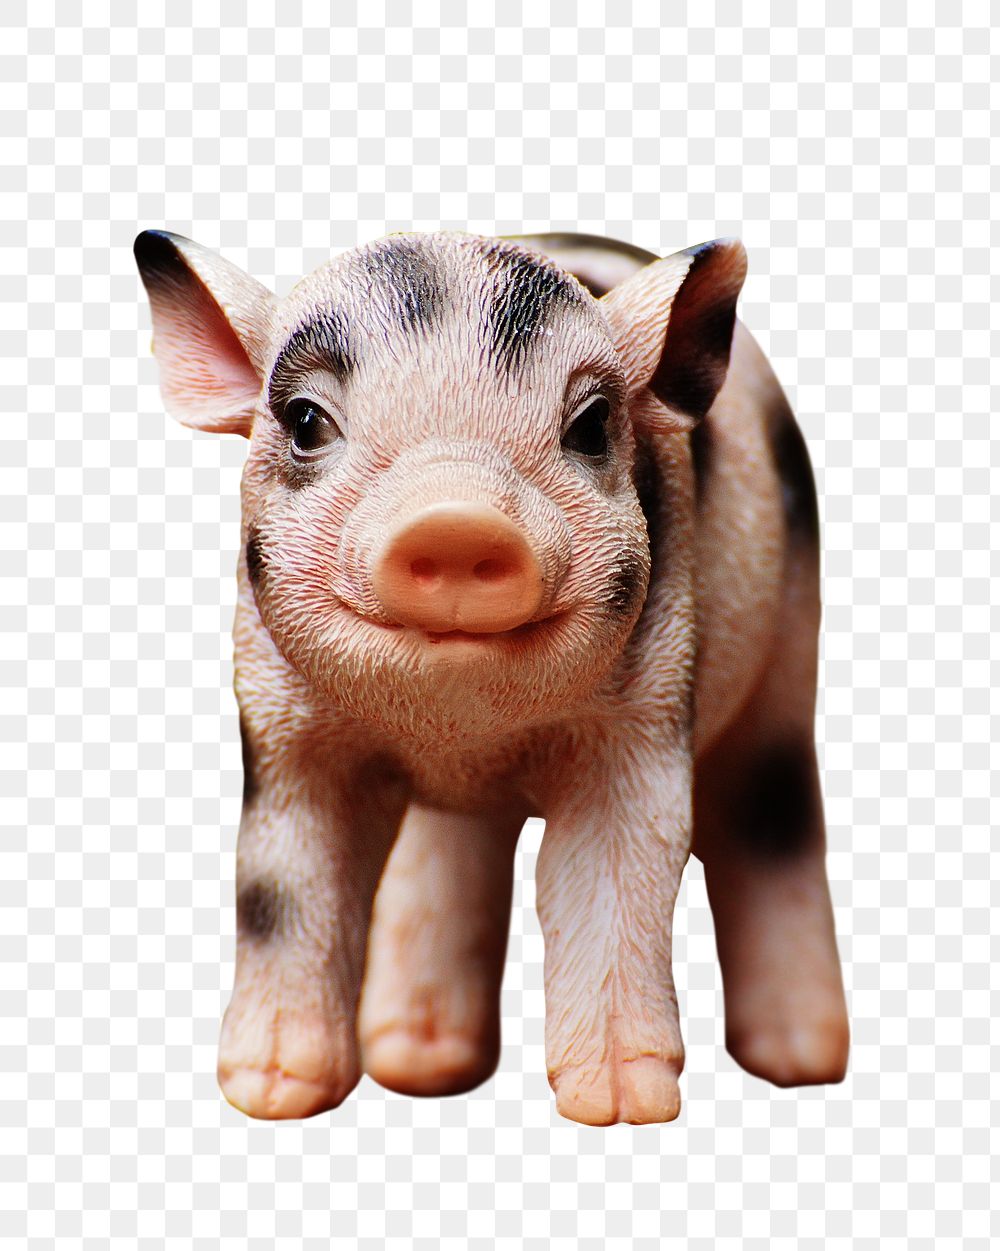 Piglet png farm animal sticker, transparent background